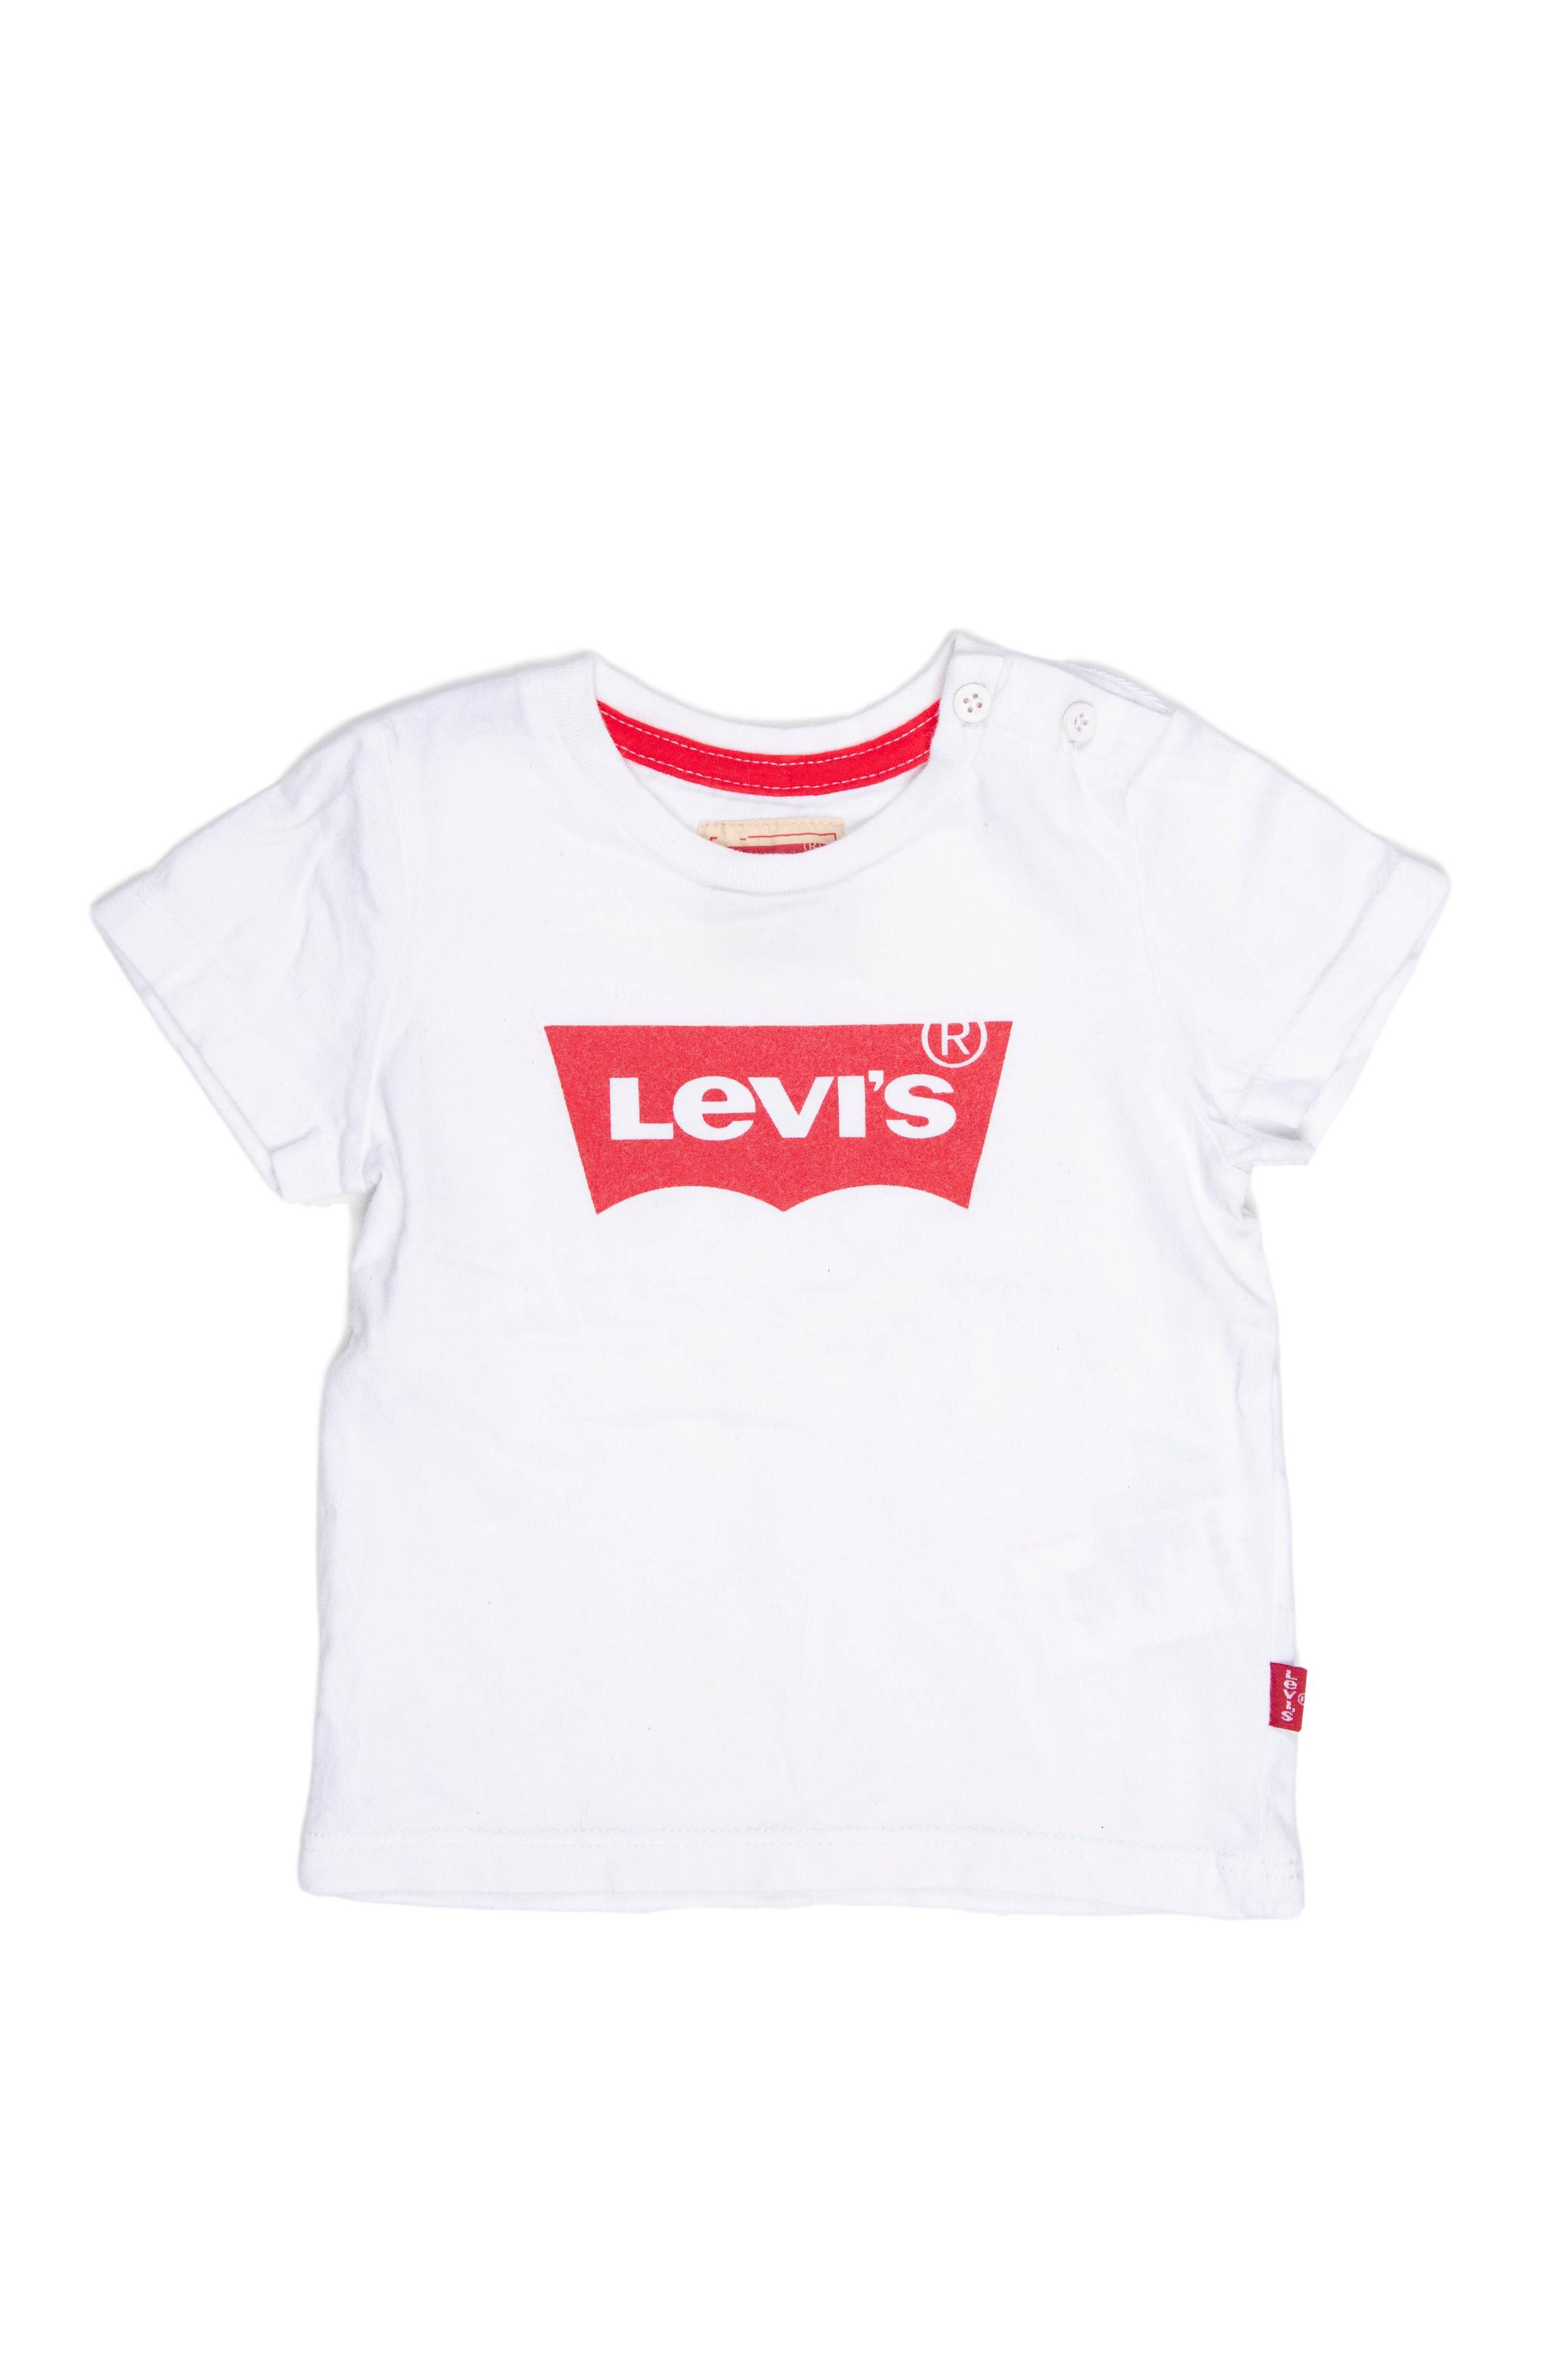 Polo Levi's 100% algodón - Levis